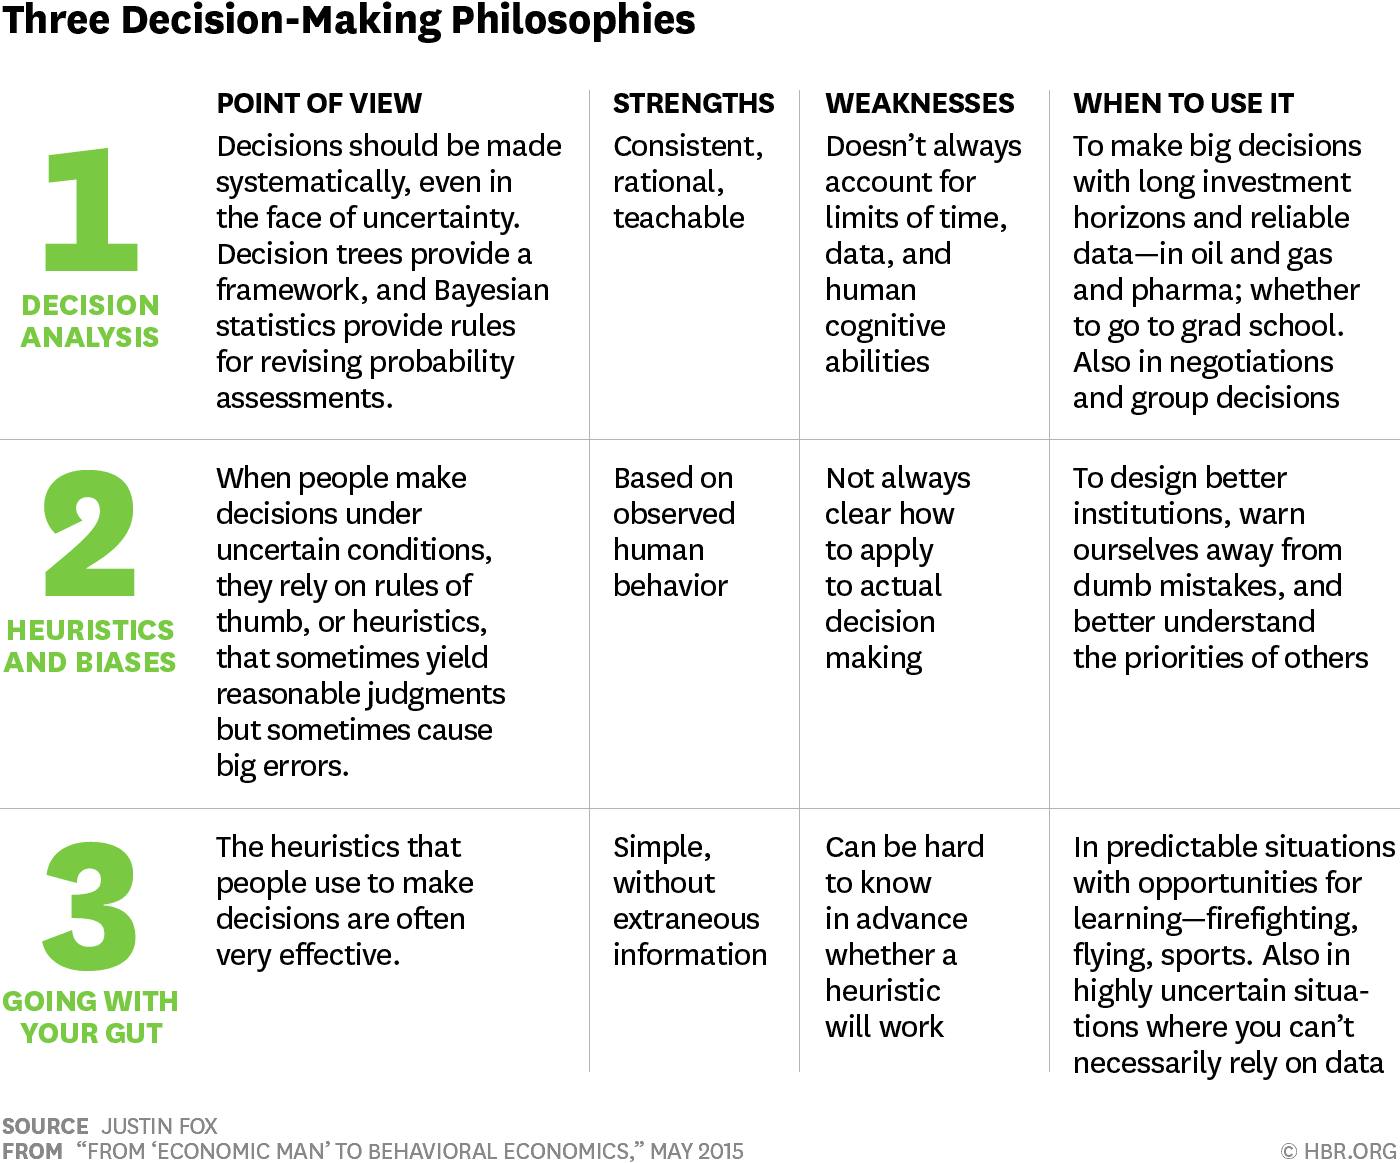 Three decision-making philosophies